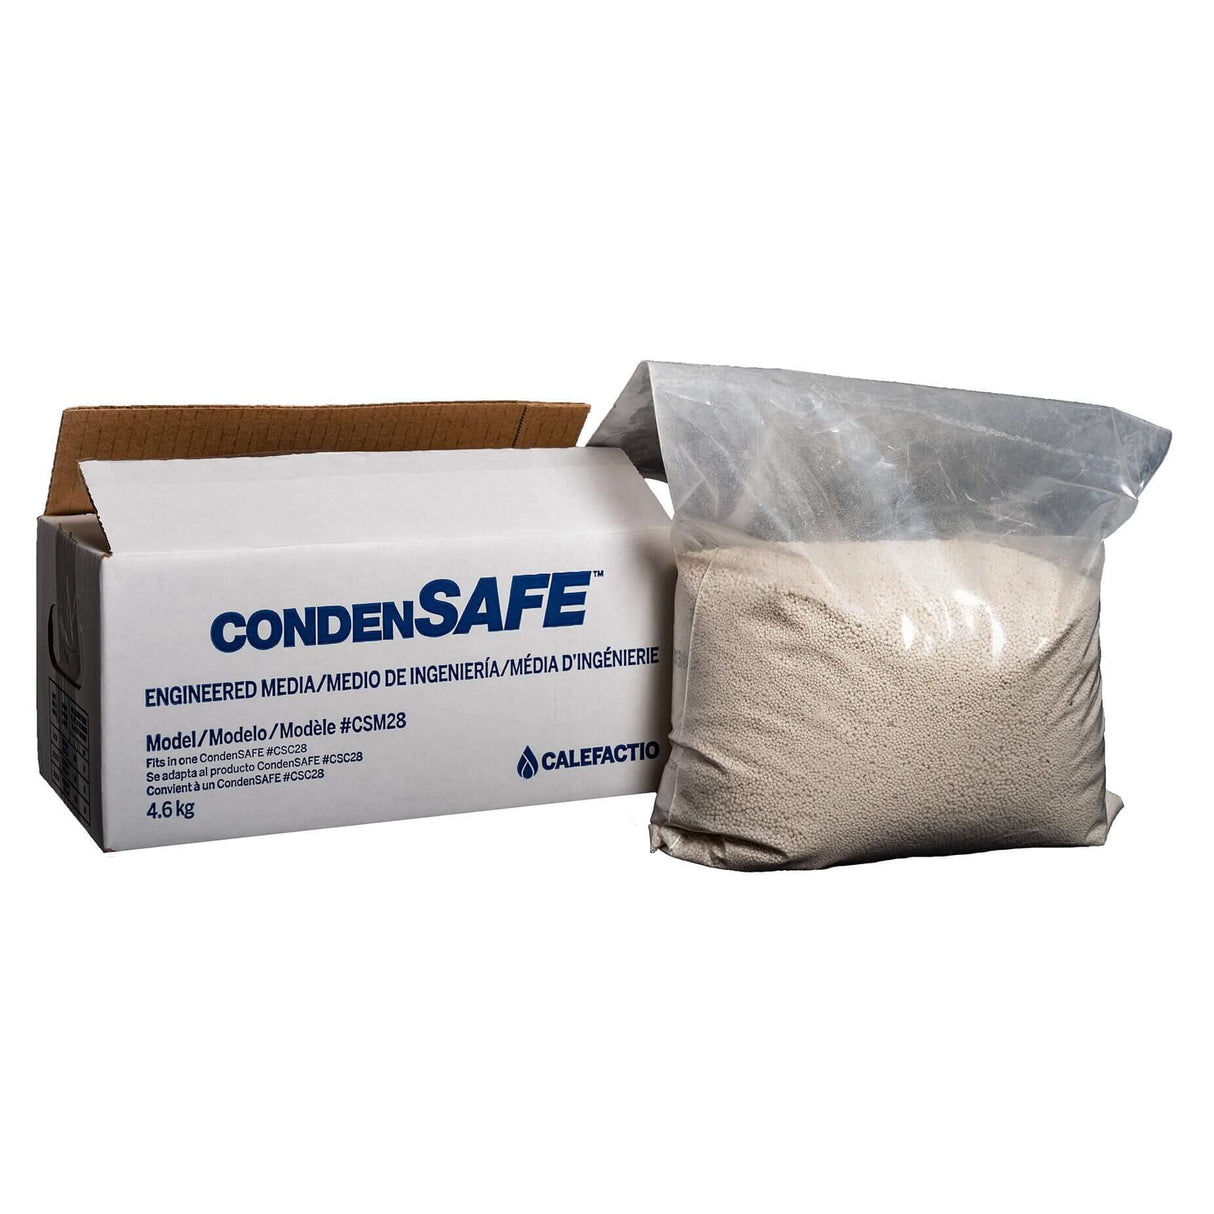 Calefactio CSM28 Condensafe condensate neutralizer for LPG NPG gas boiler and water heater